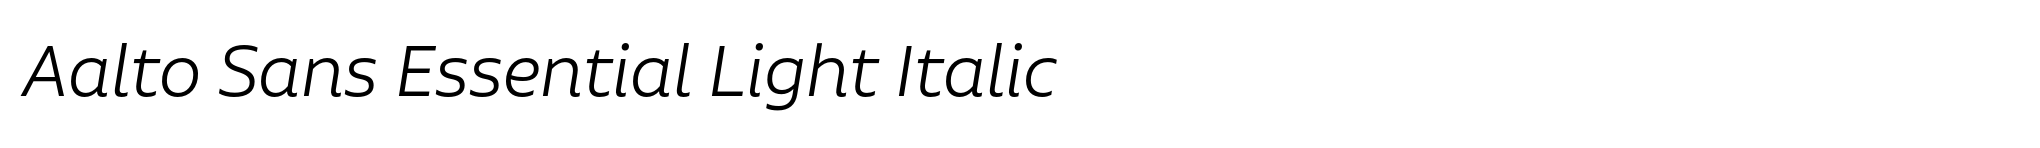 Aalto Sans Essential Light Italic image